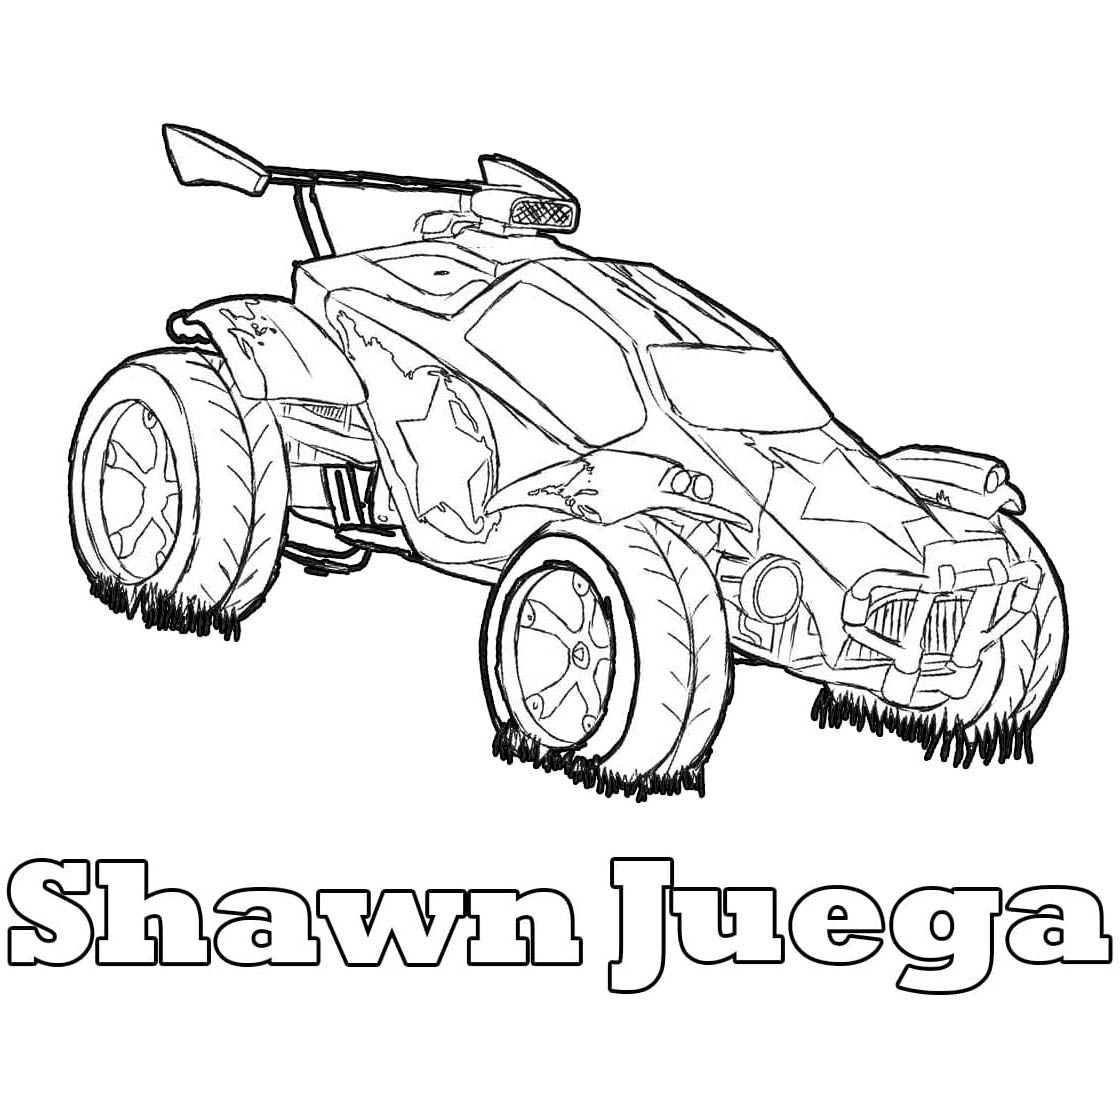 Free Rocket League Coloring Pages Shawn Juega printable